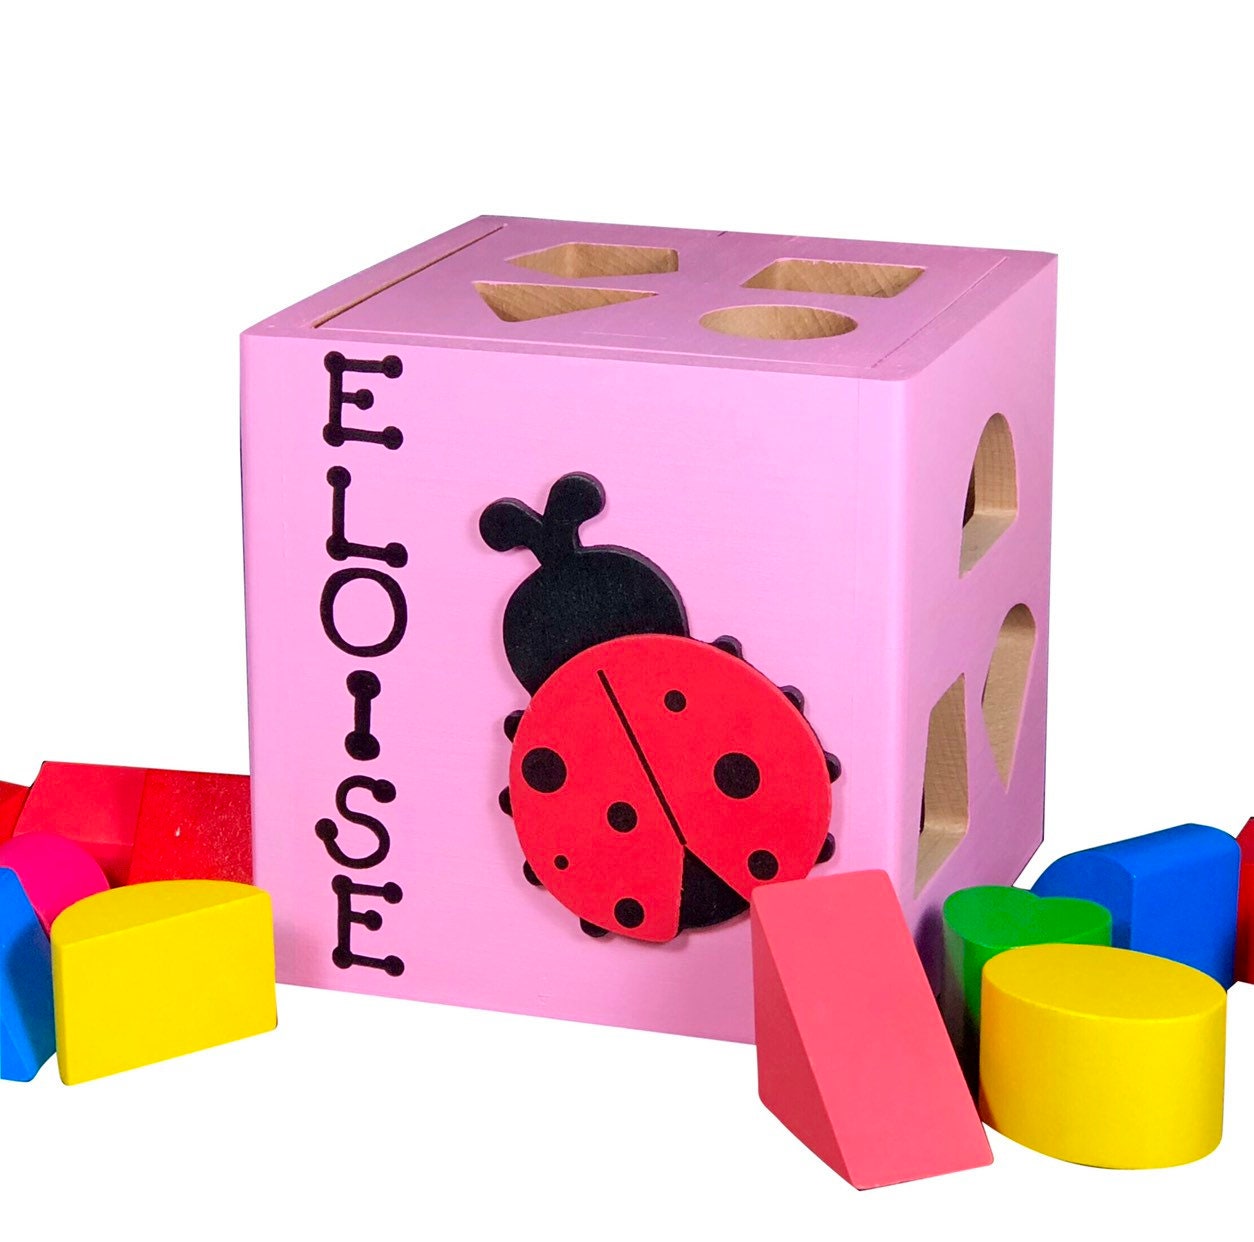 Toddler wood toys / custom shape sorter activity